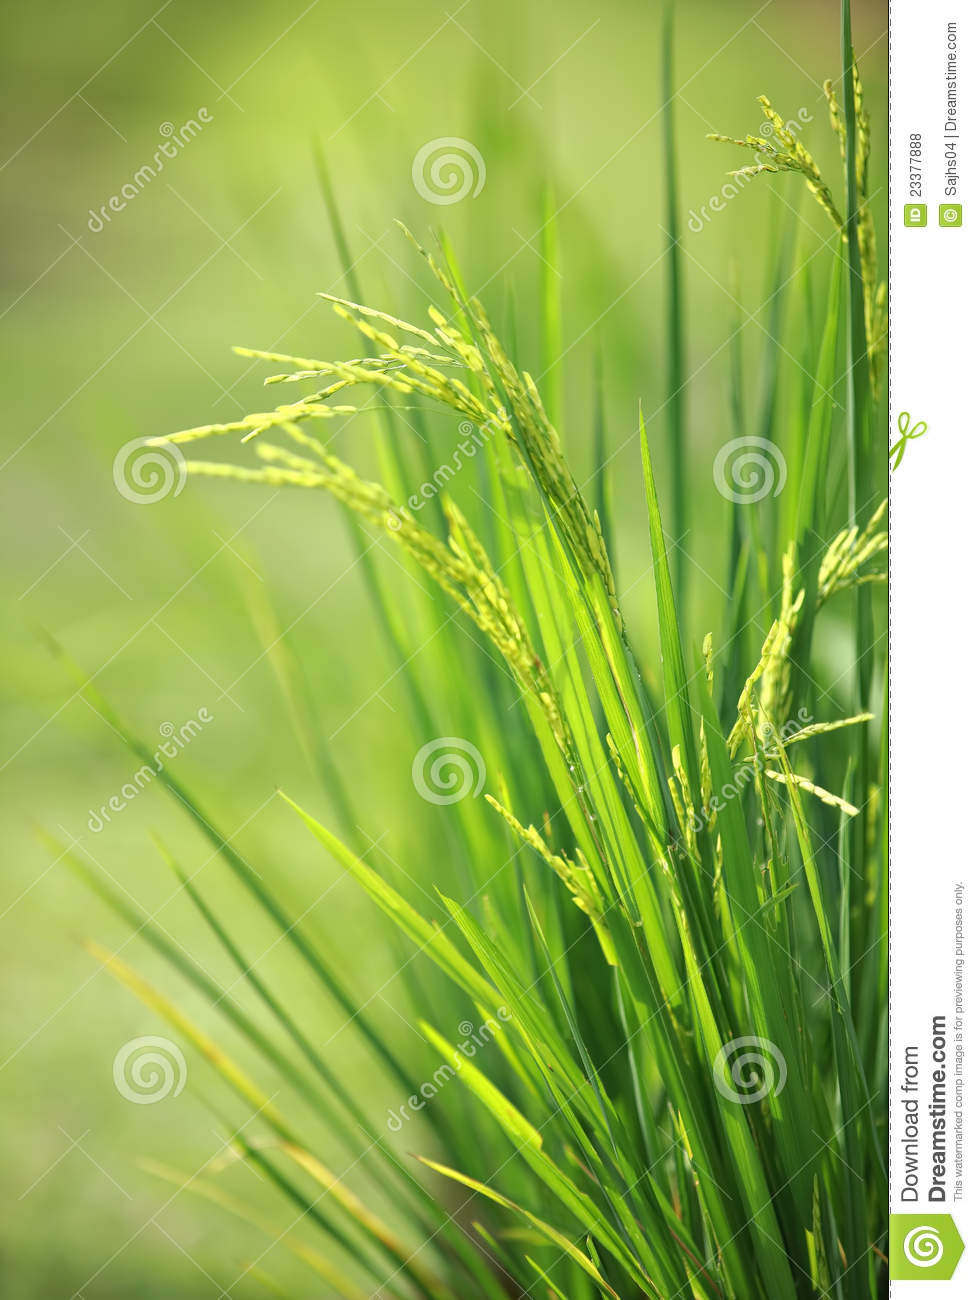 Green Rice Paddy Plant Royalty Free Stock Photos   Image  23377888